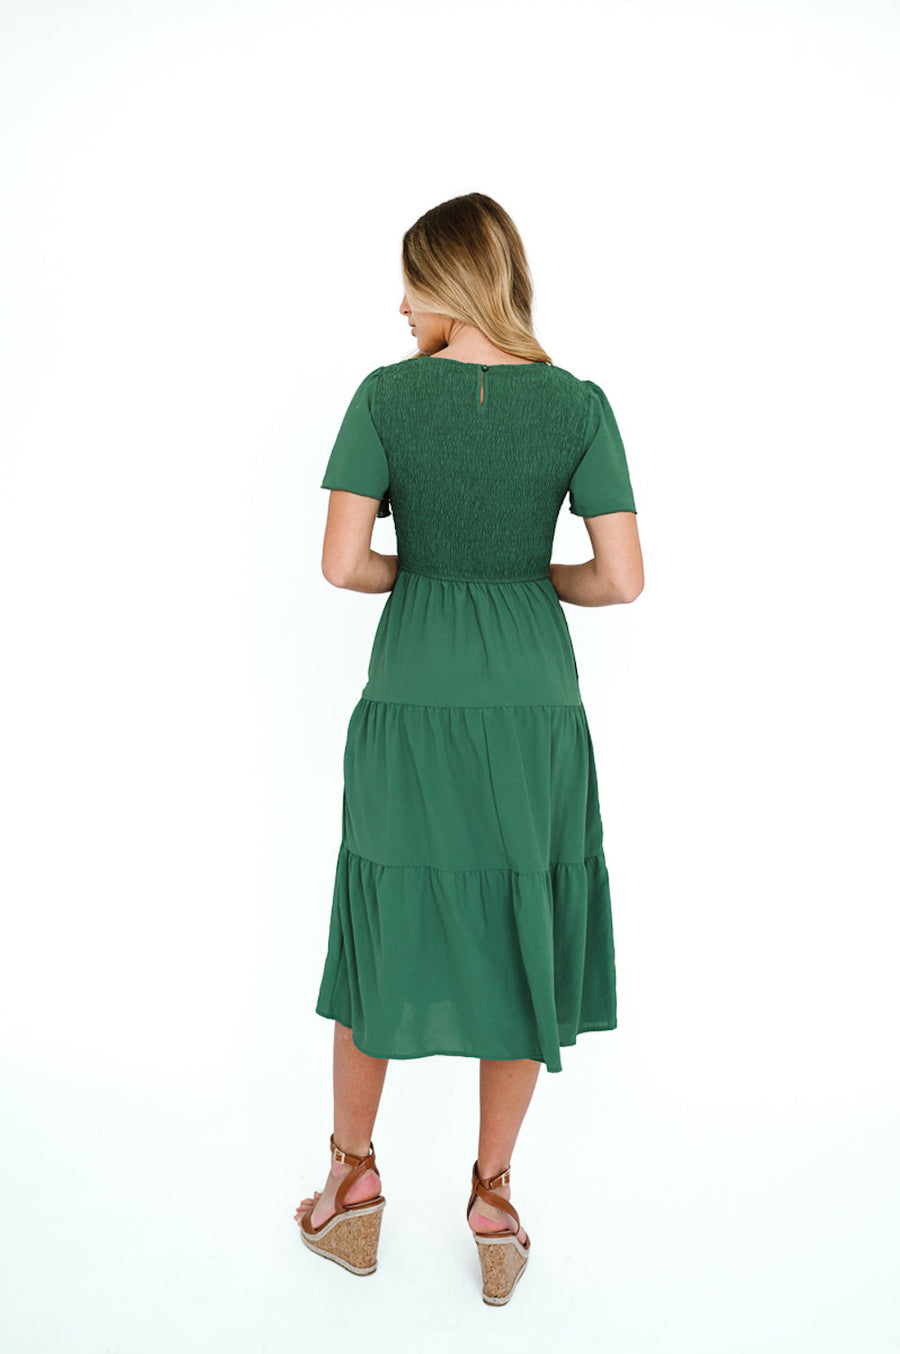 Fehrnvi green dress